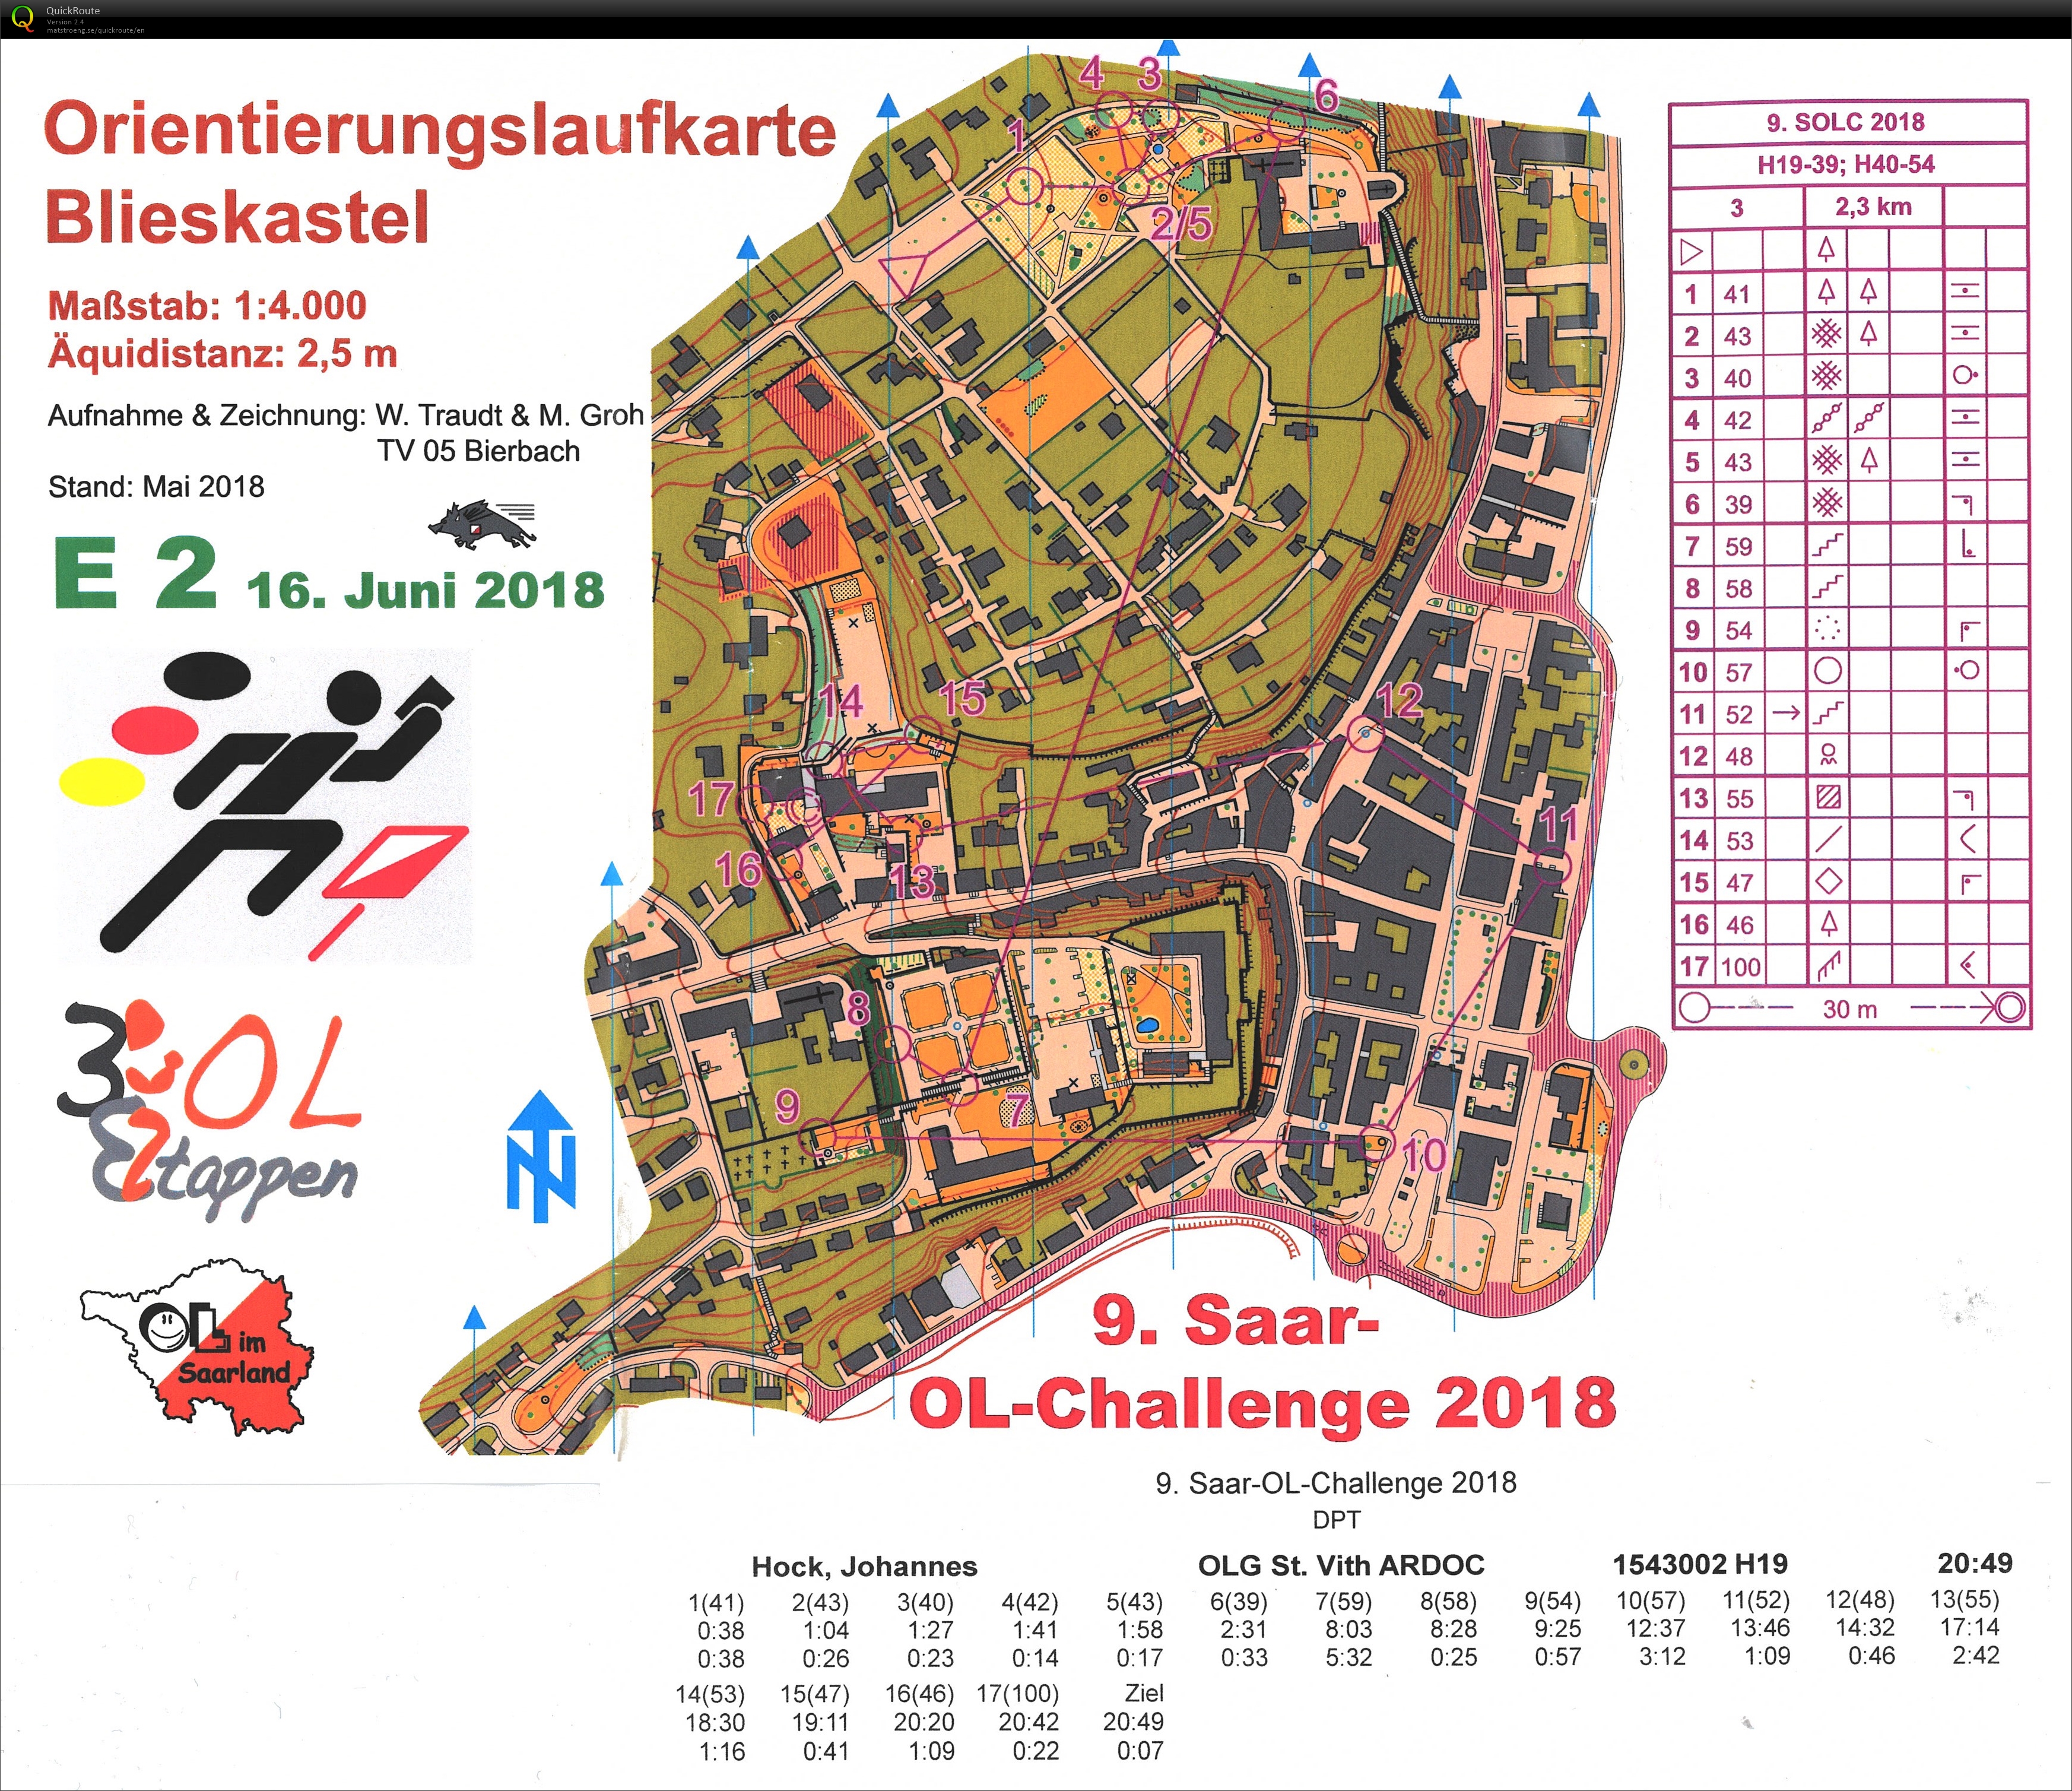 9. Saar-OL-Challenge 2018 (16-06-2018)